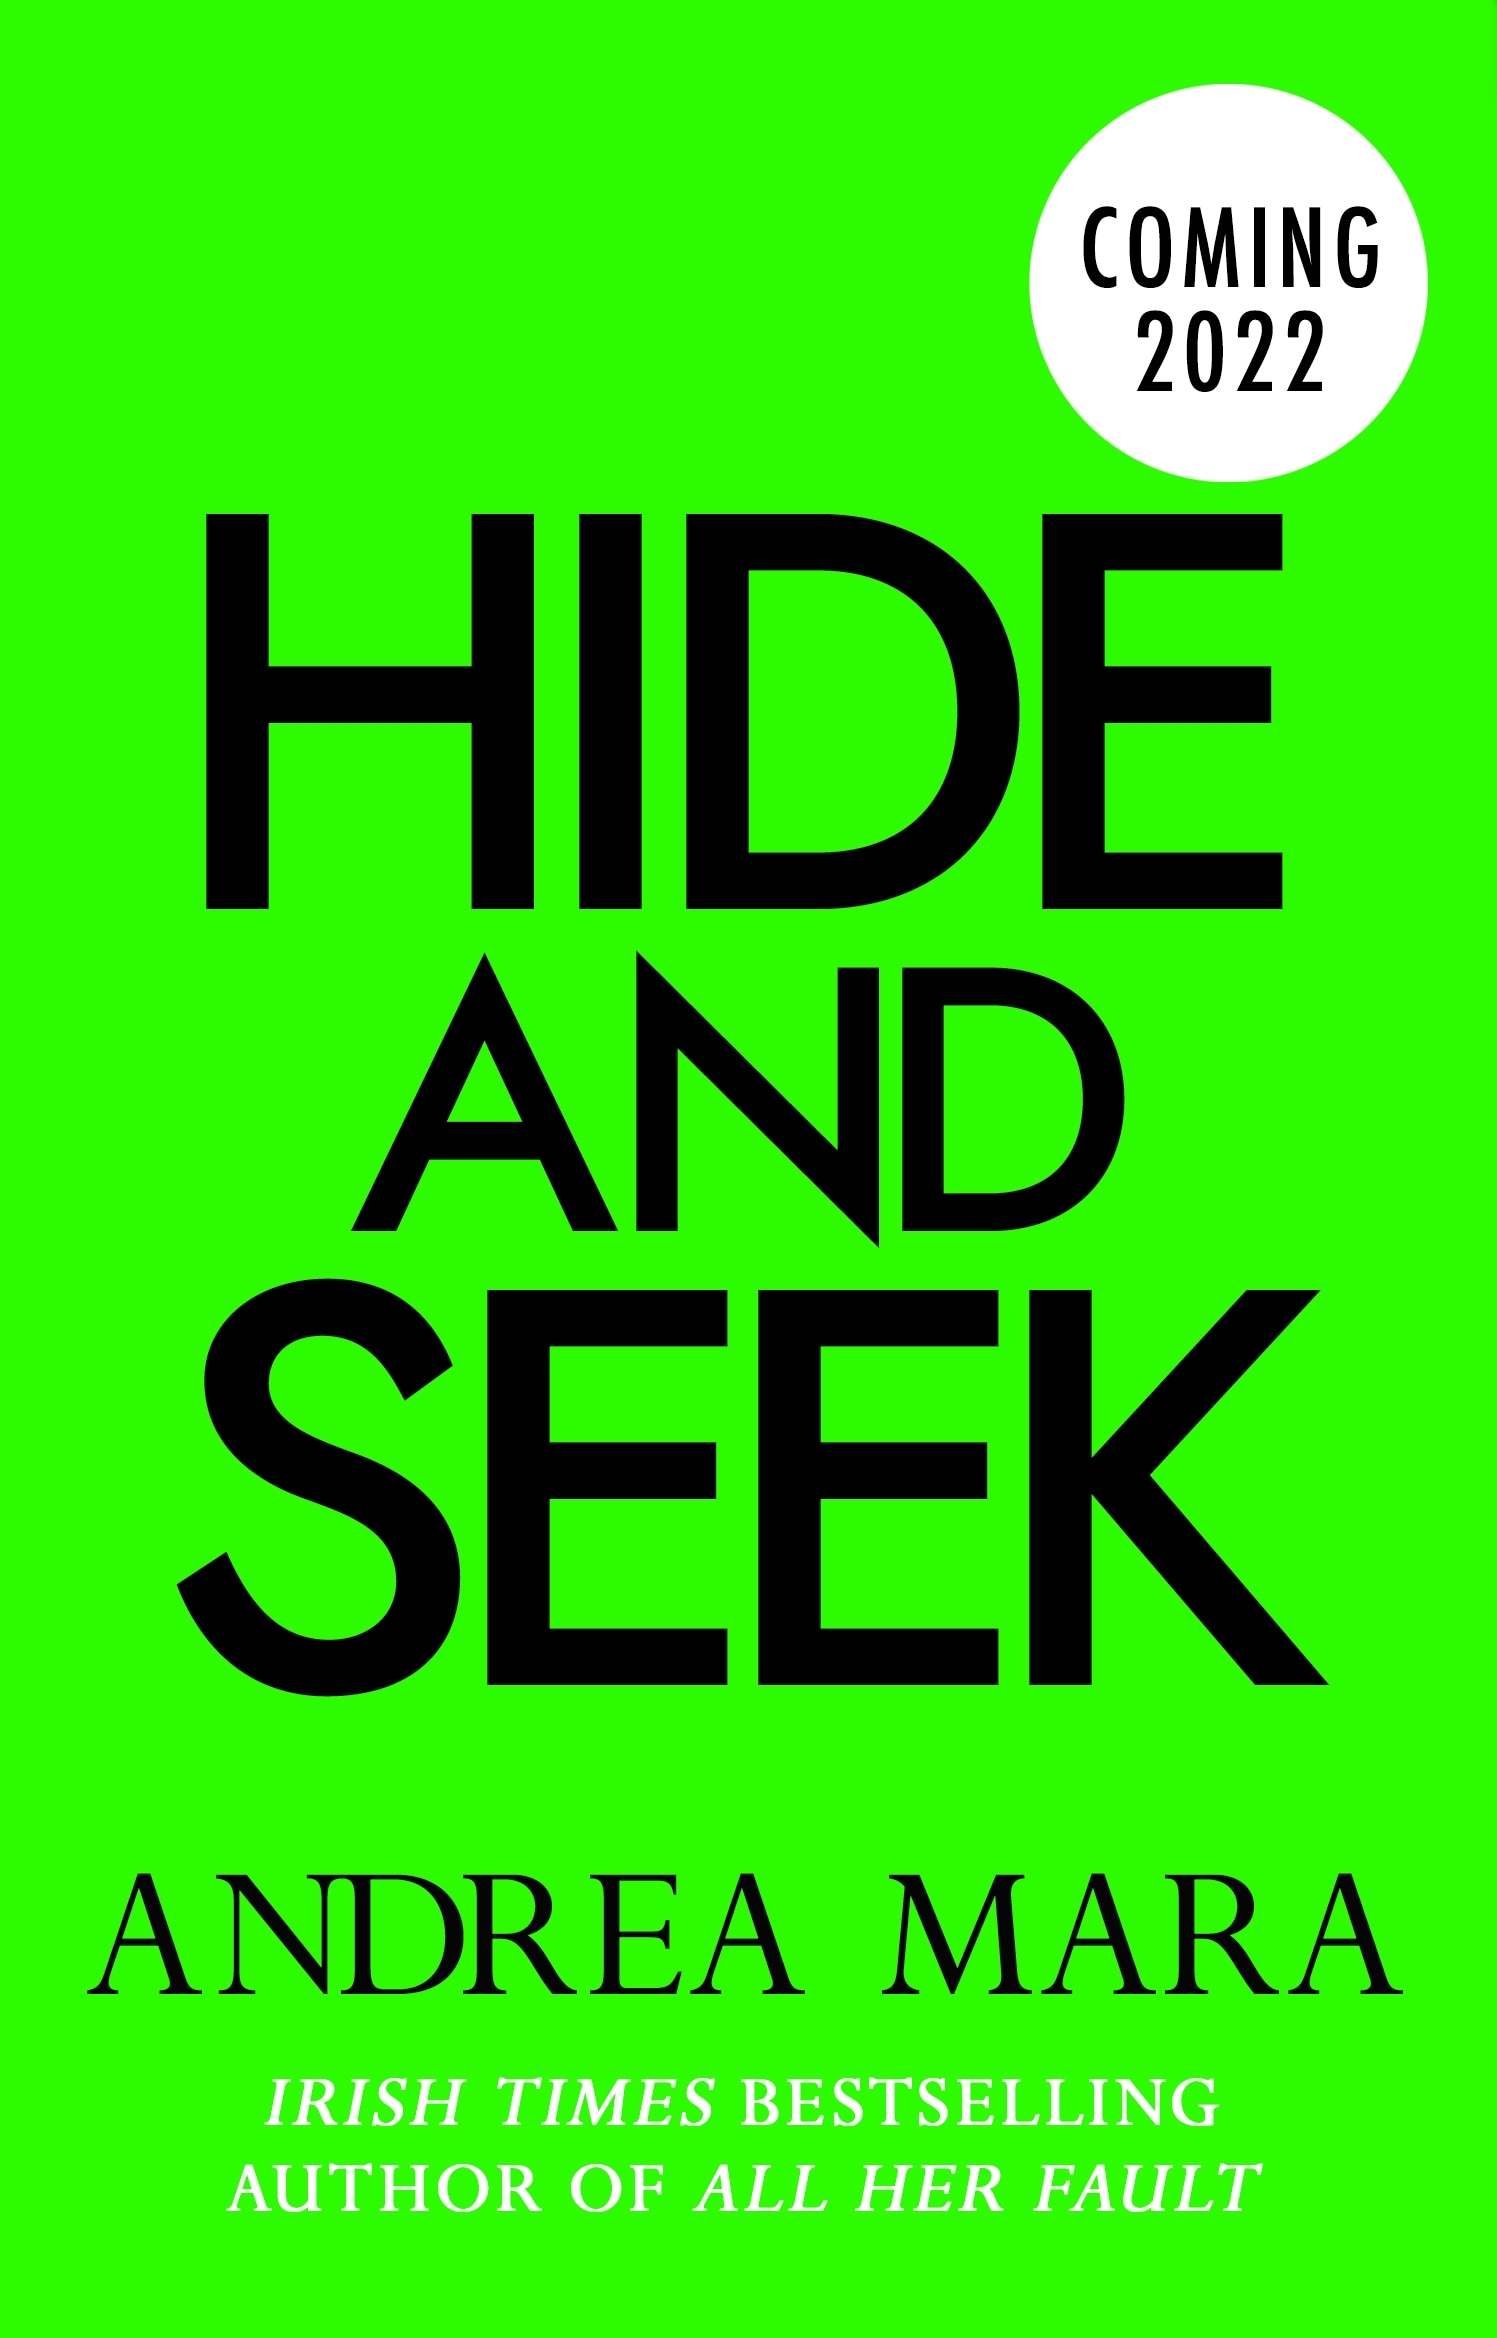 Book “Hide and Seek” by Andrea Mara — August 4, 2022